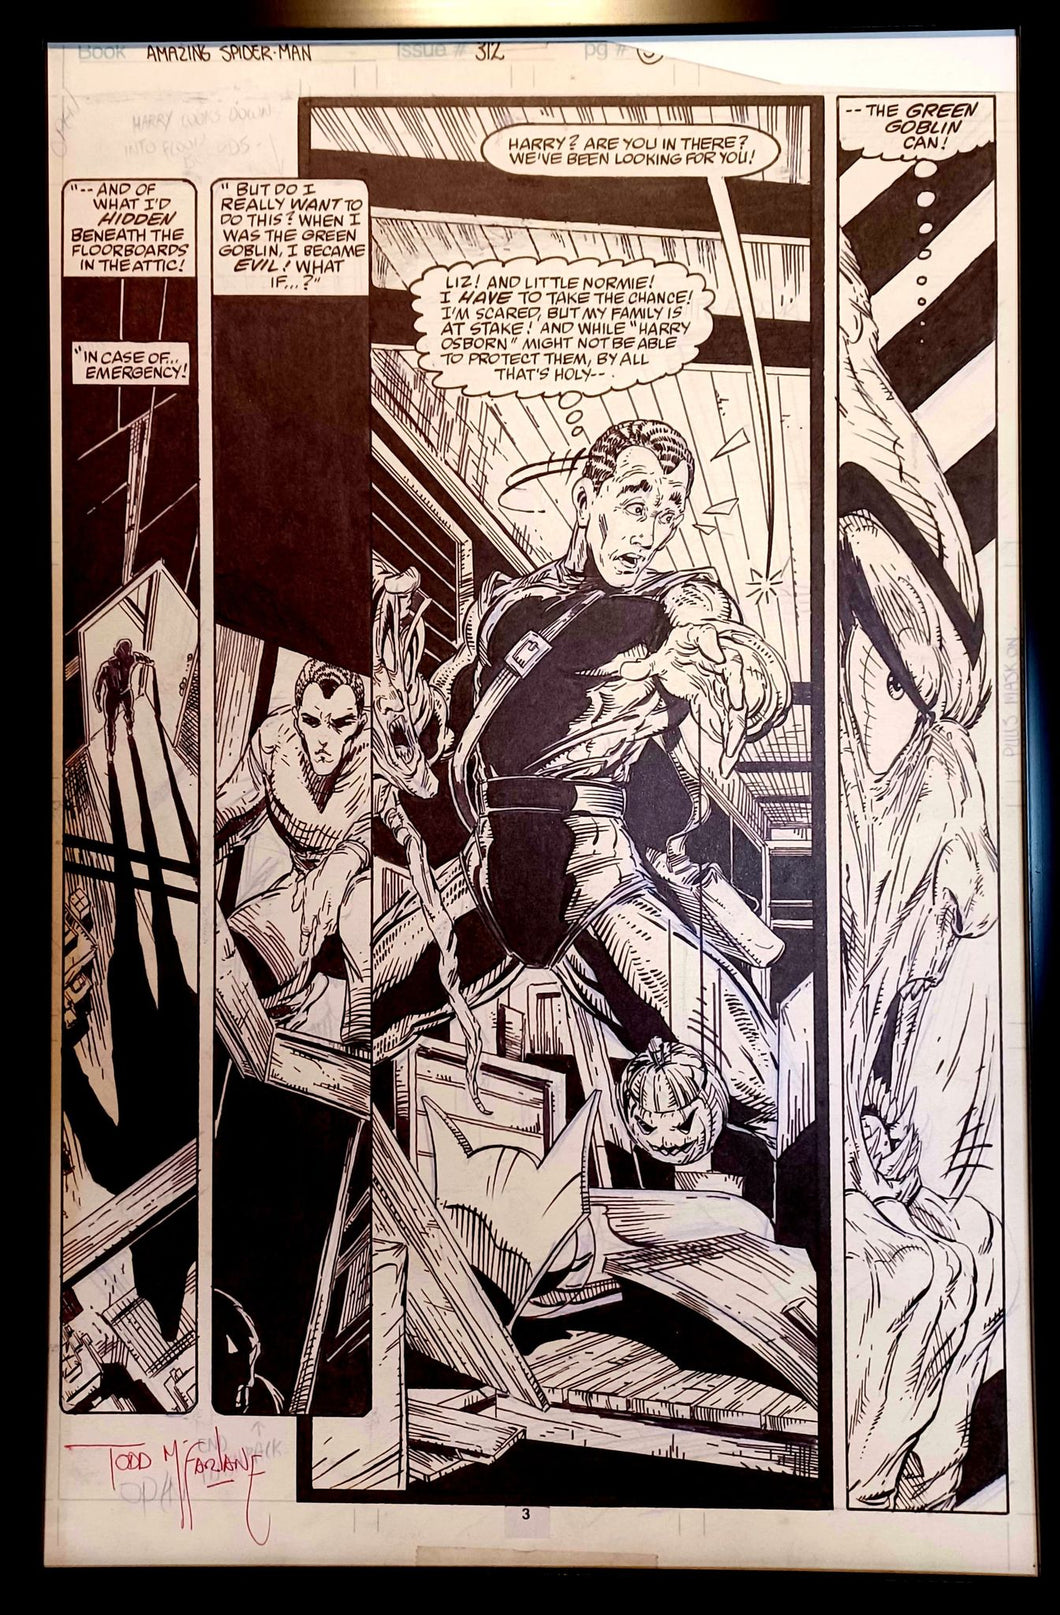 Amazing Spider-Man #312 pg. 3 by Todd McFarlane 11x17 FRAMED Original Art Print Comic Poster